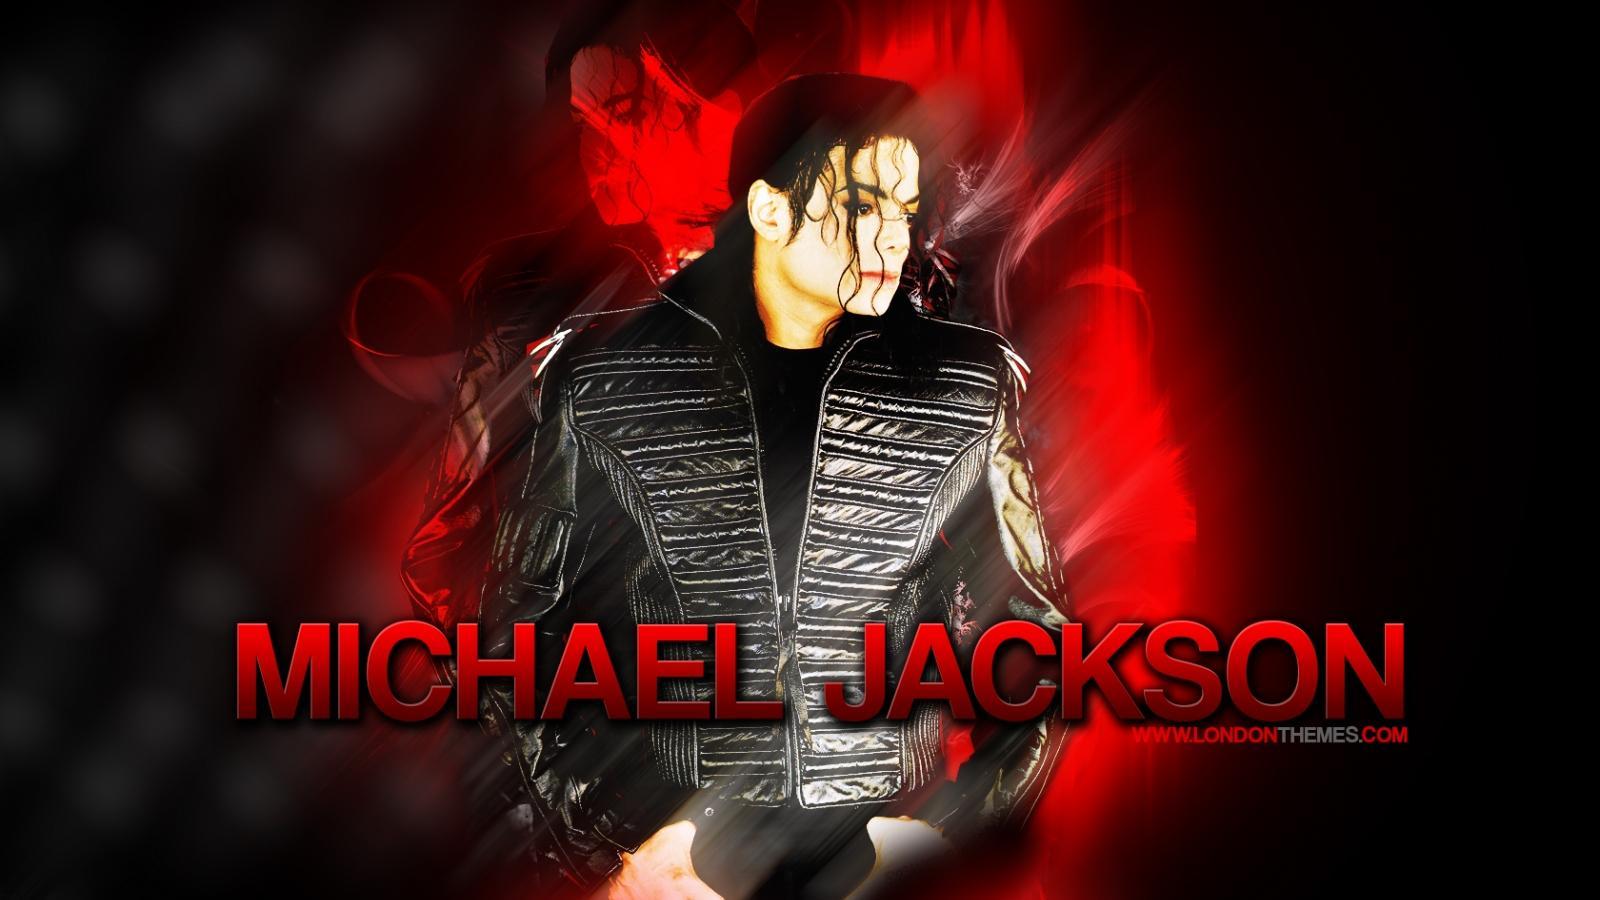 Michael Jackson Thriller Wallpapers Top Free Michael Jackson Thriller Backgrounds Wallpaperaccess